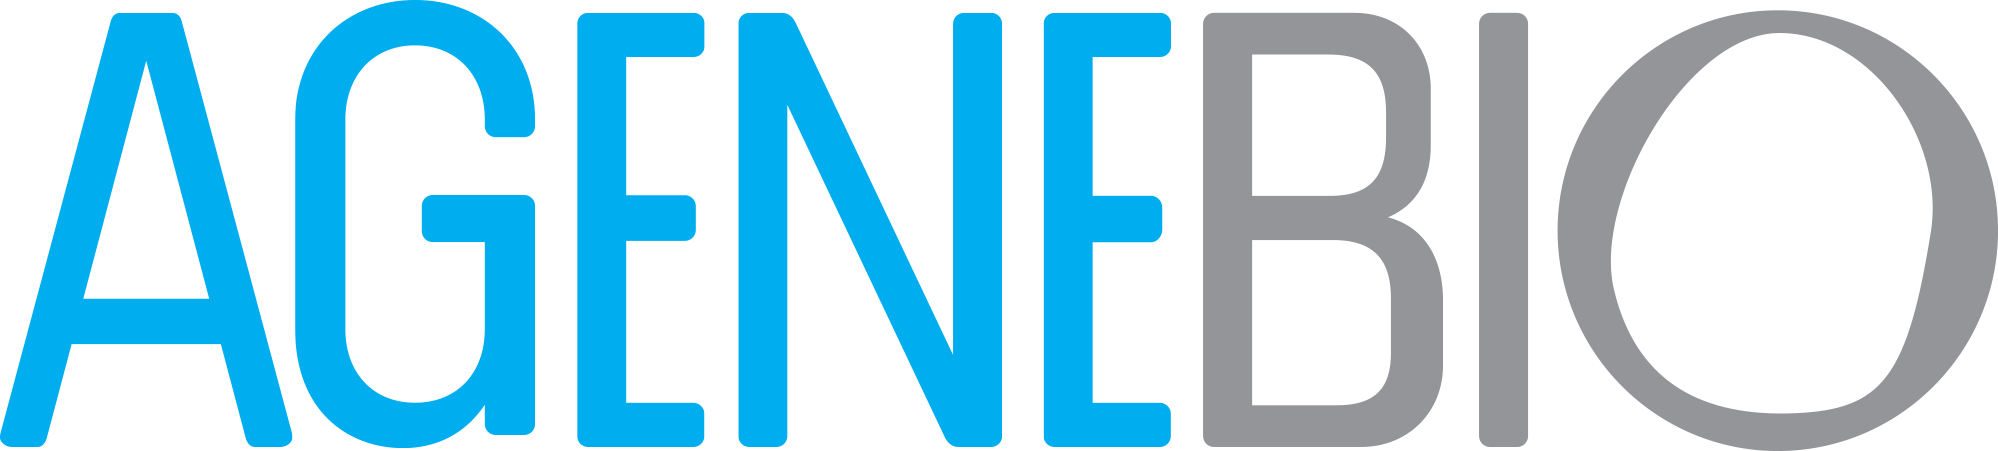 Agene logo (1).png